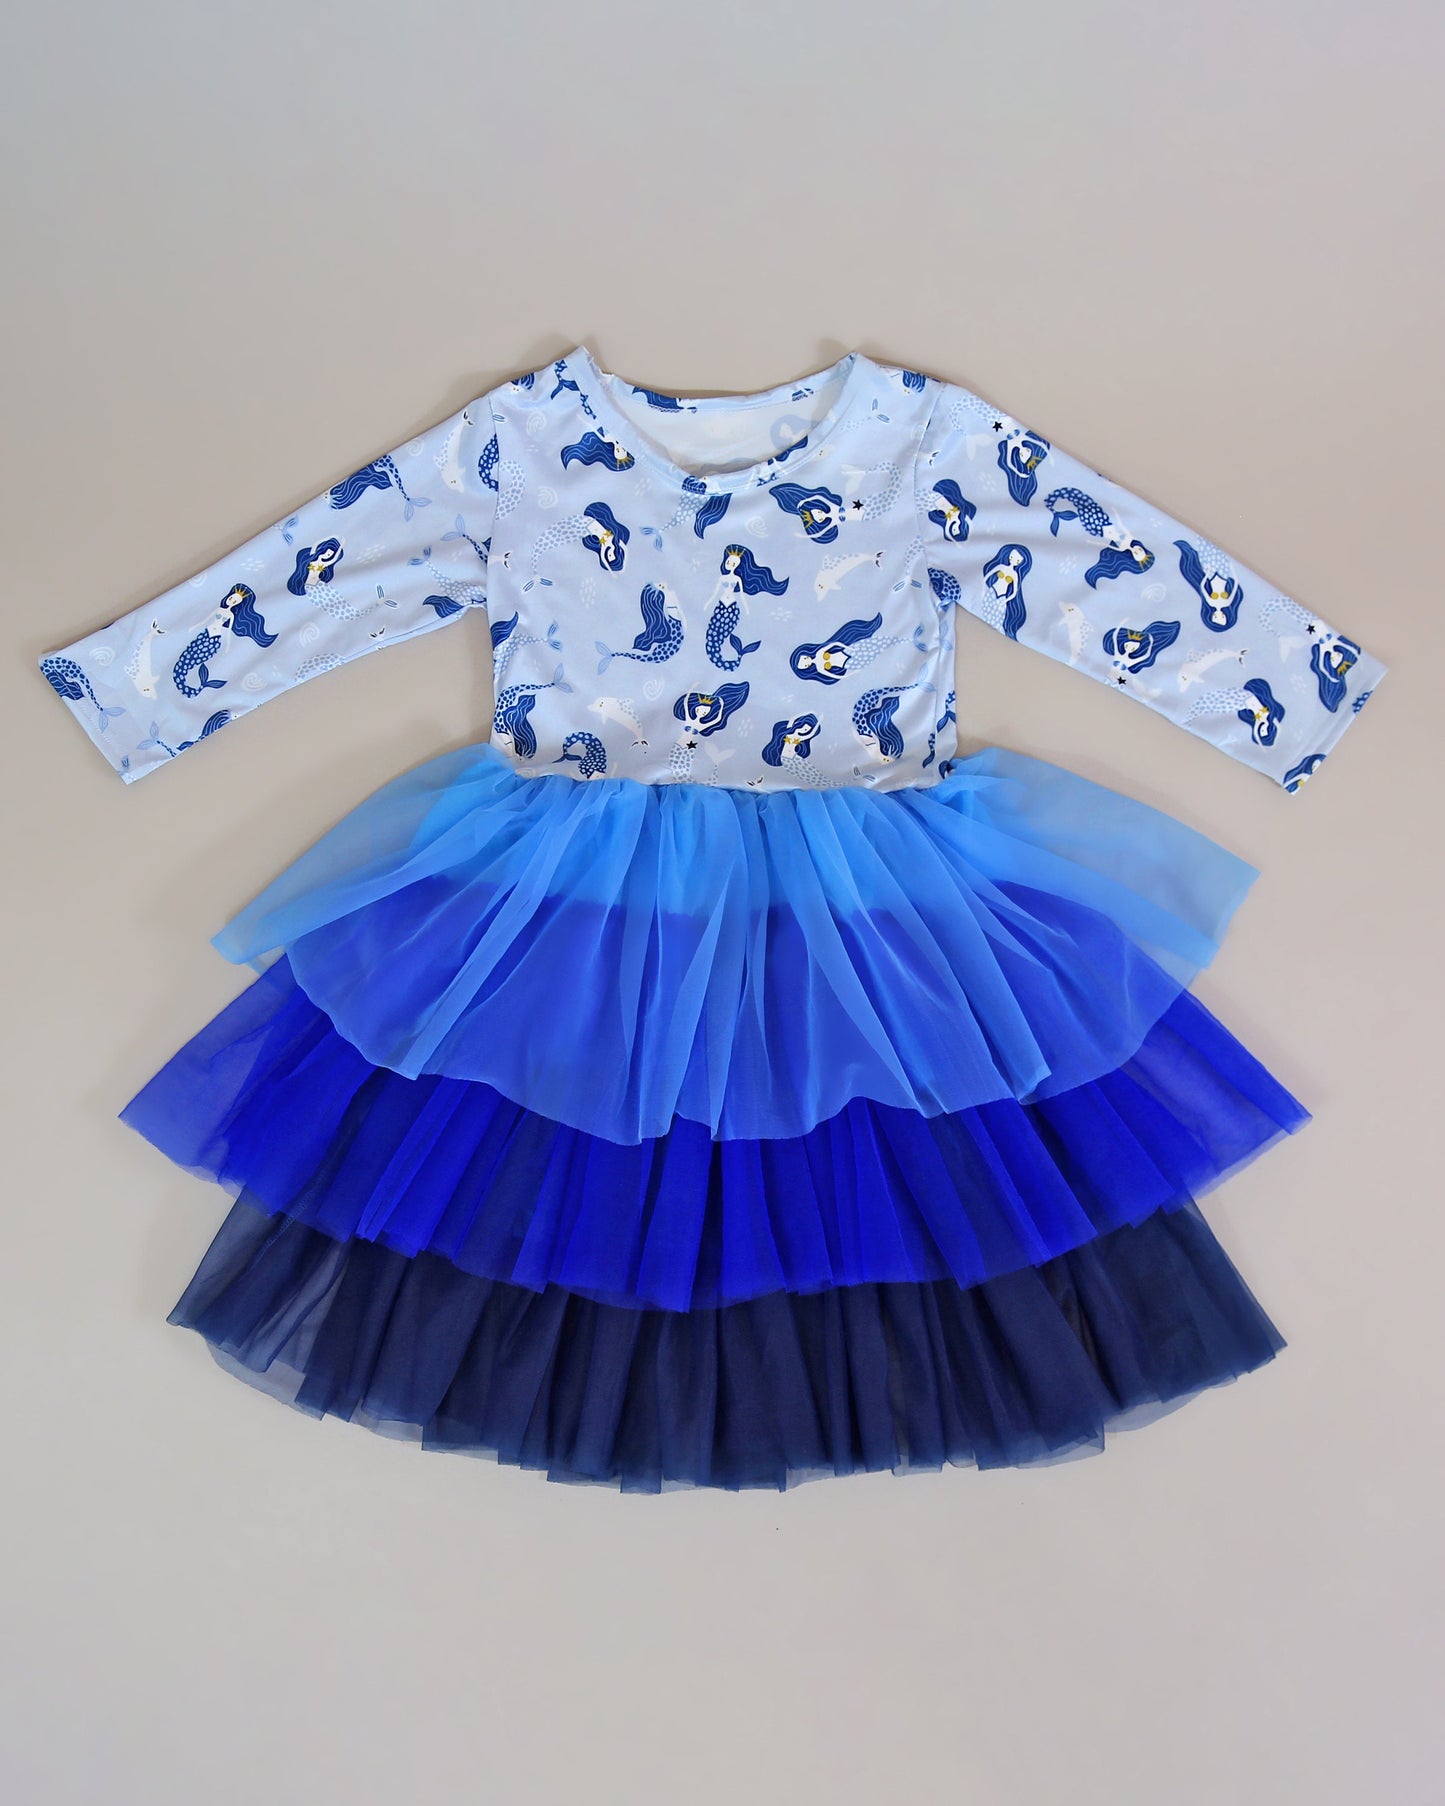 3/4 Sleeve Tutu Dress in Blue Mermaid